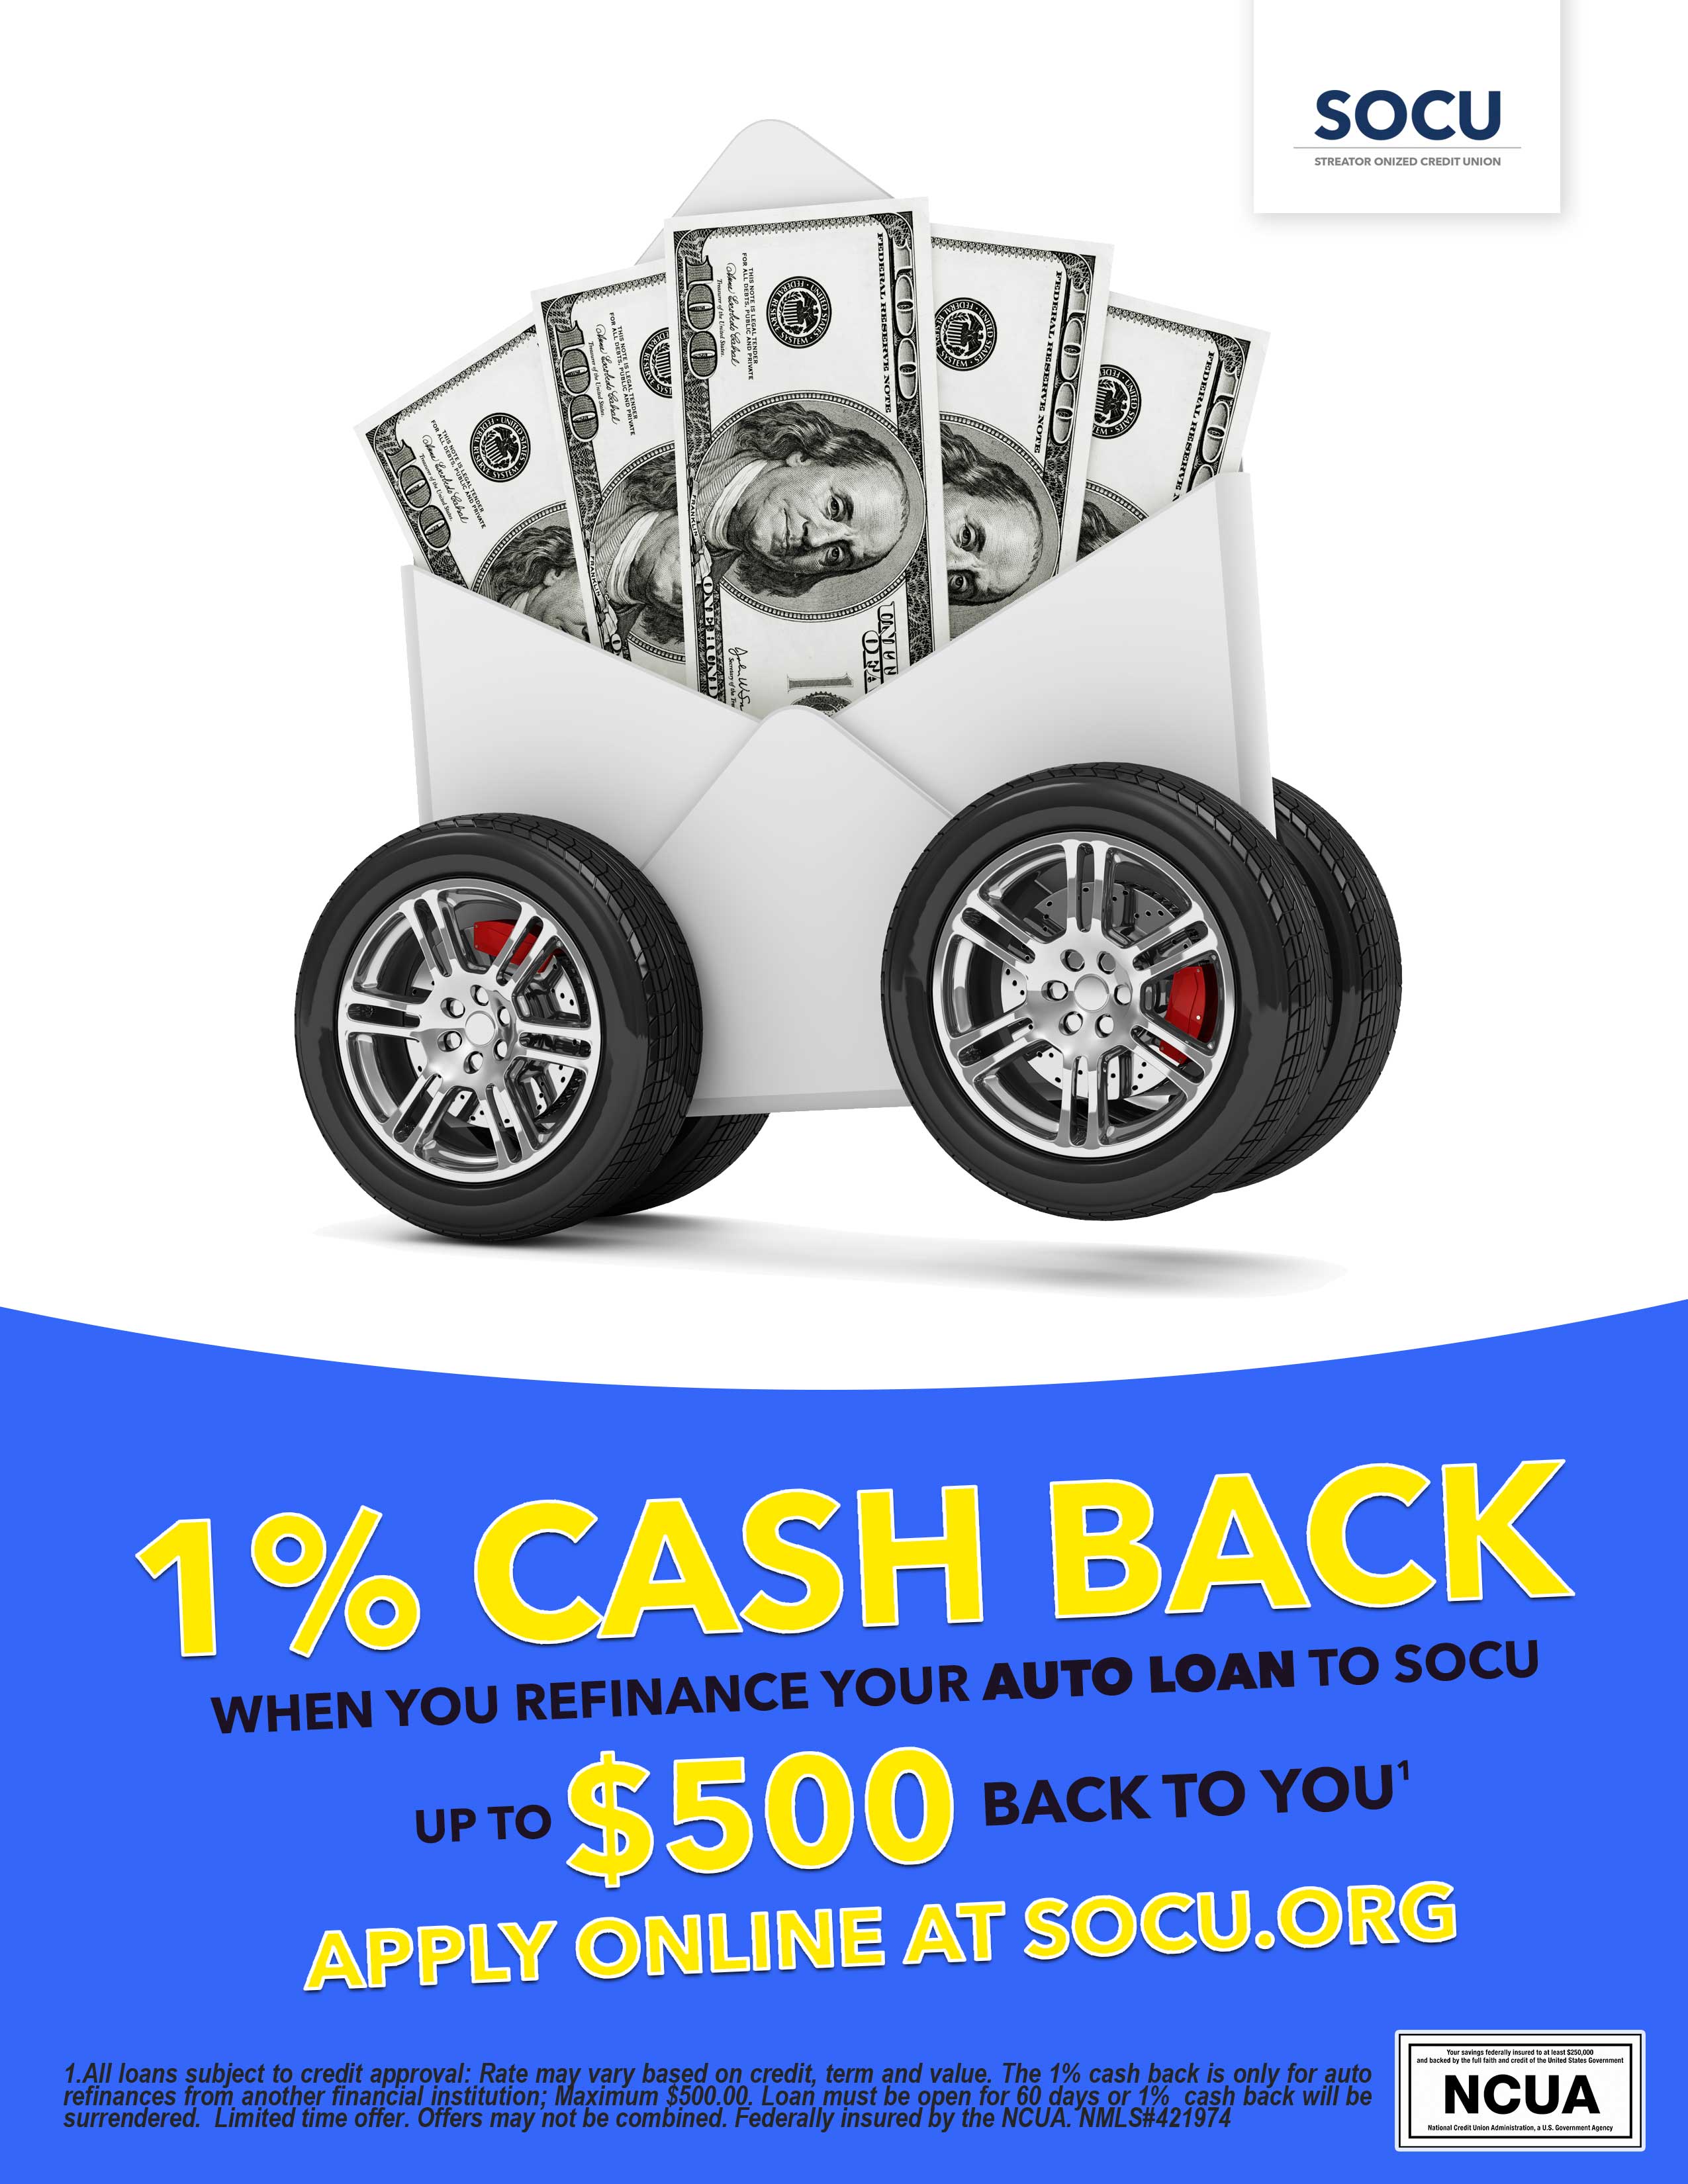 Cash Back ad